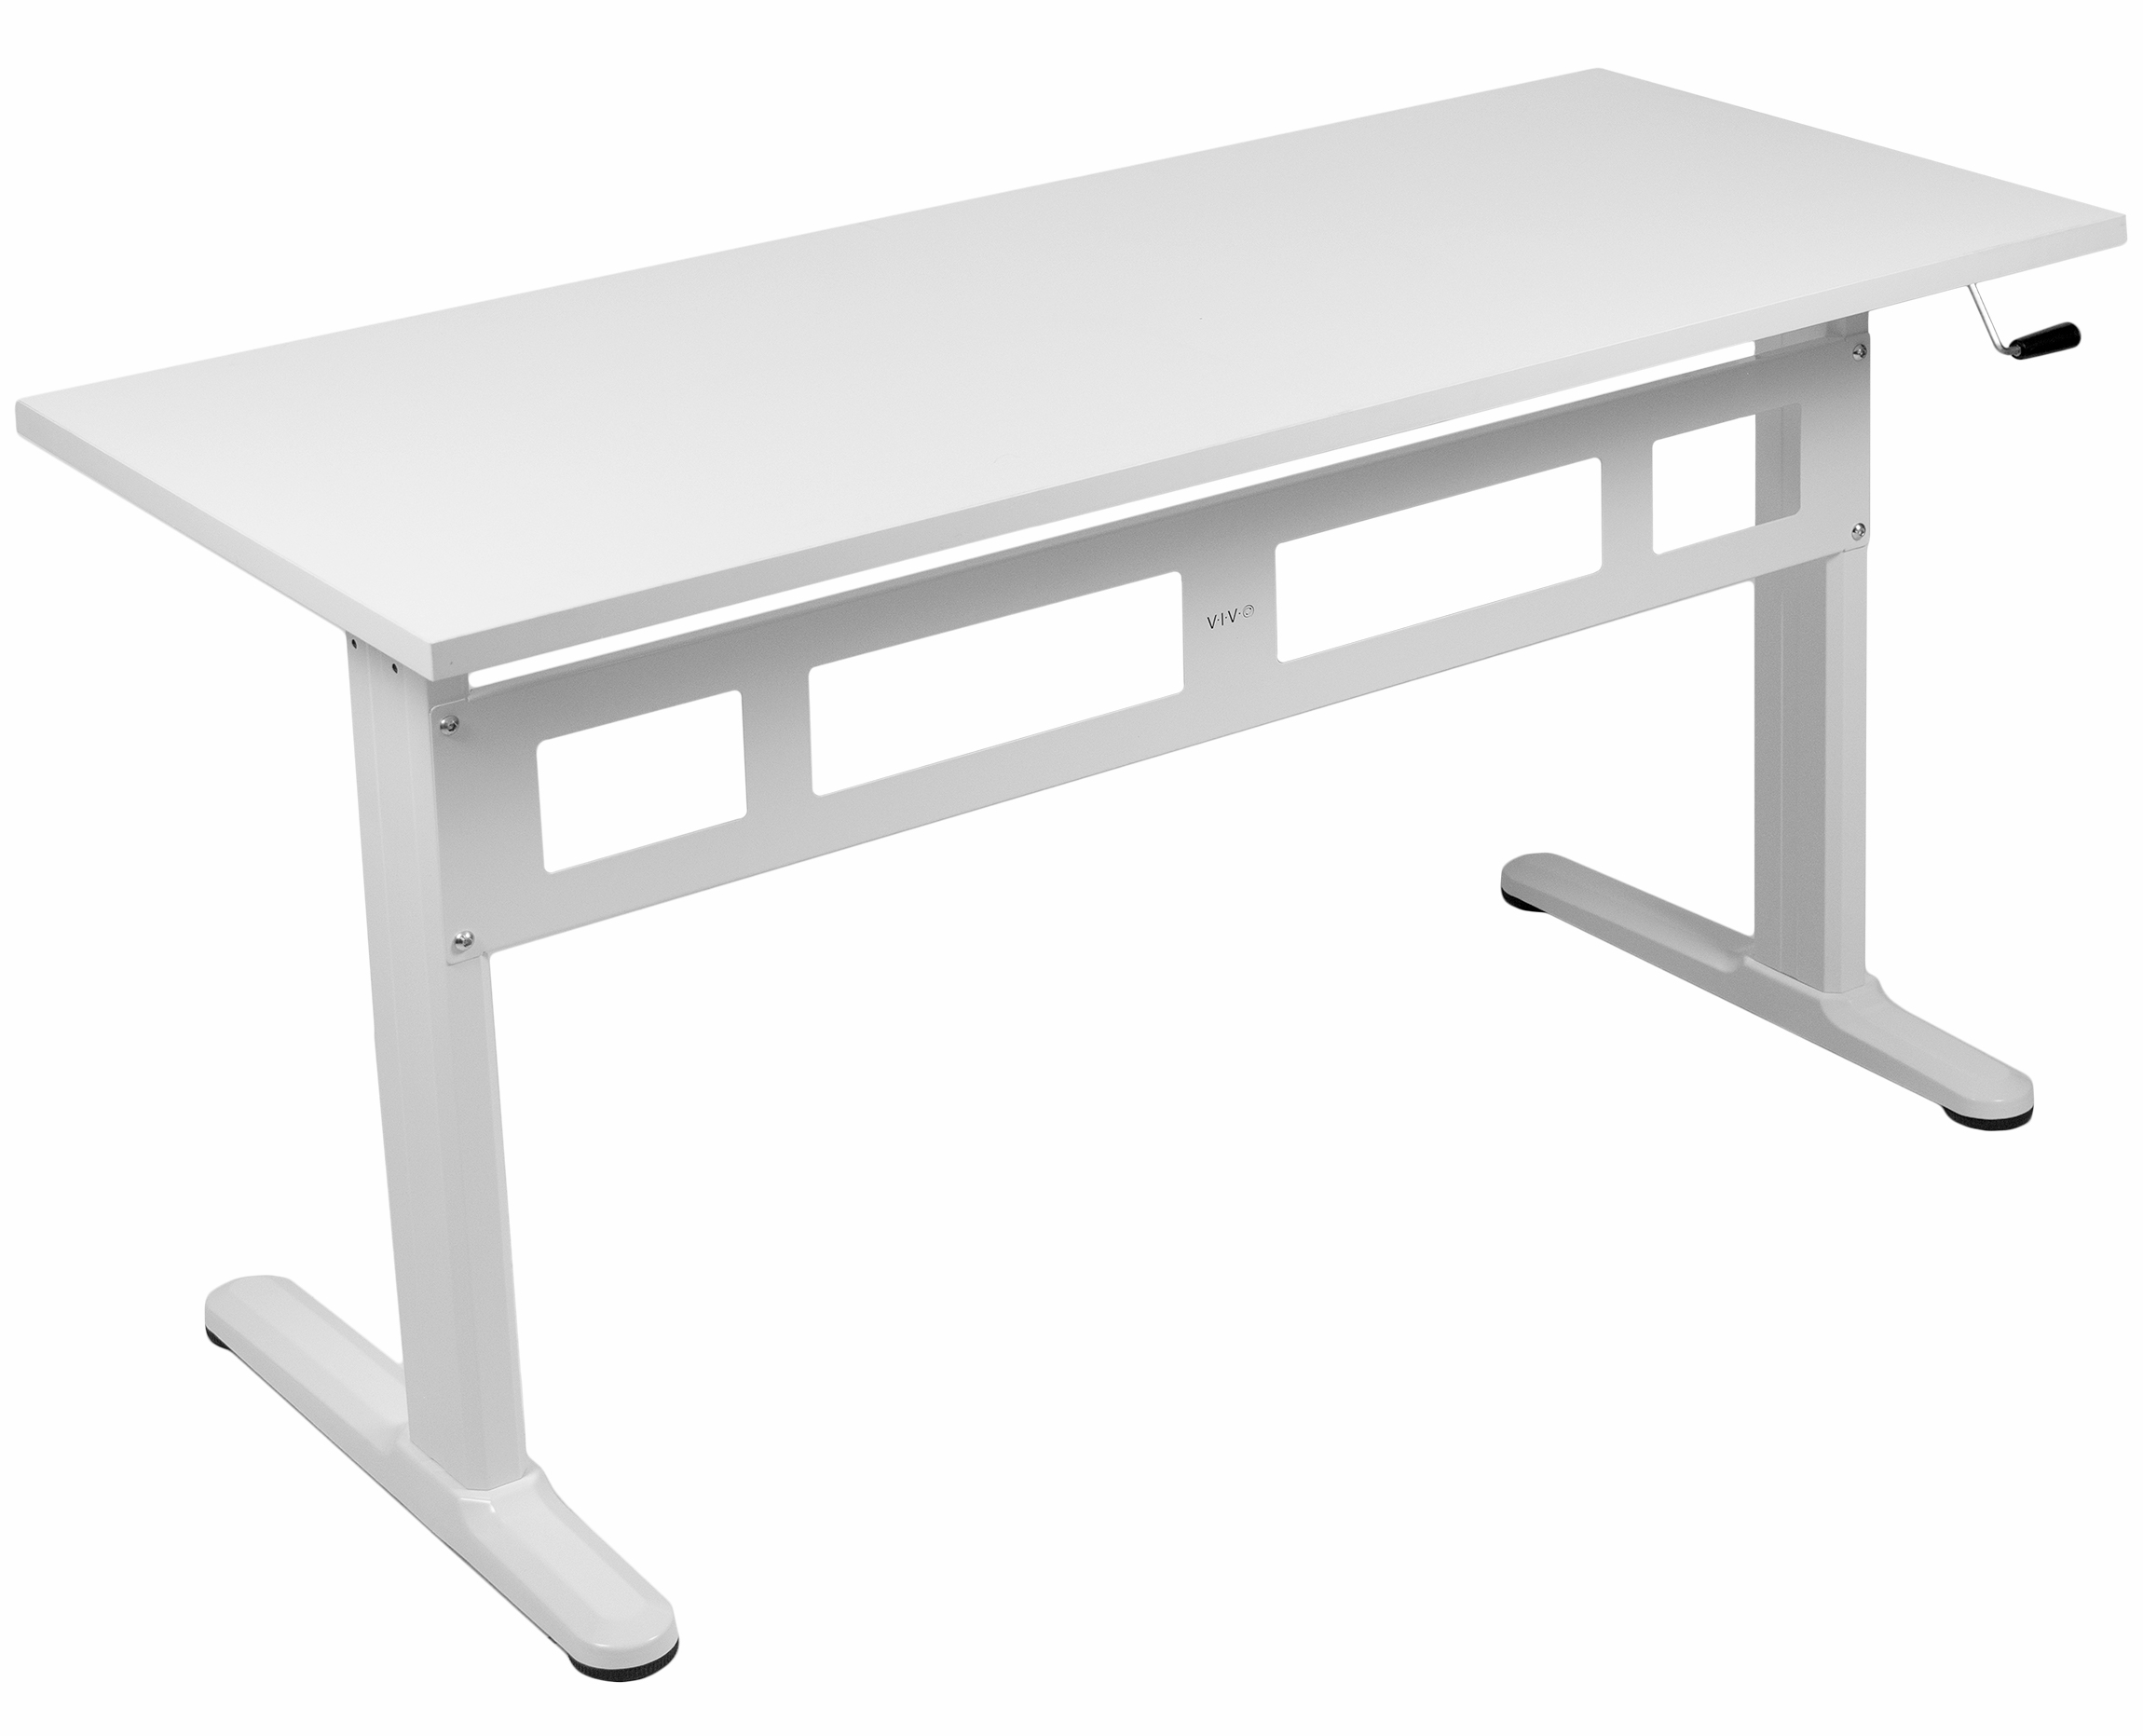 Used Manual Crank Stand Up Height Adjustable Desk Frame